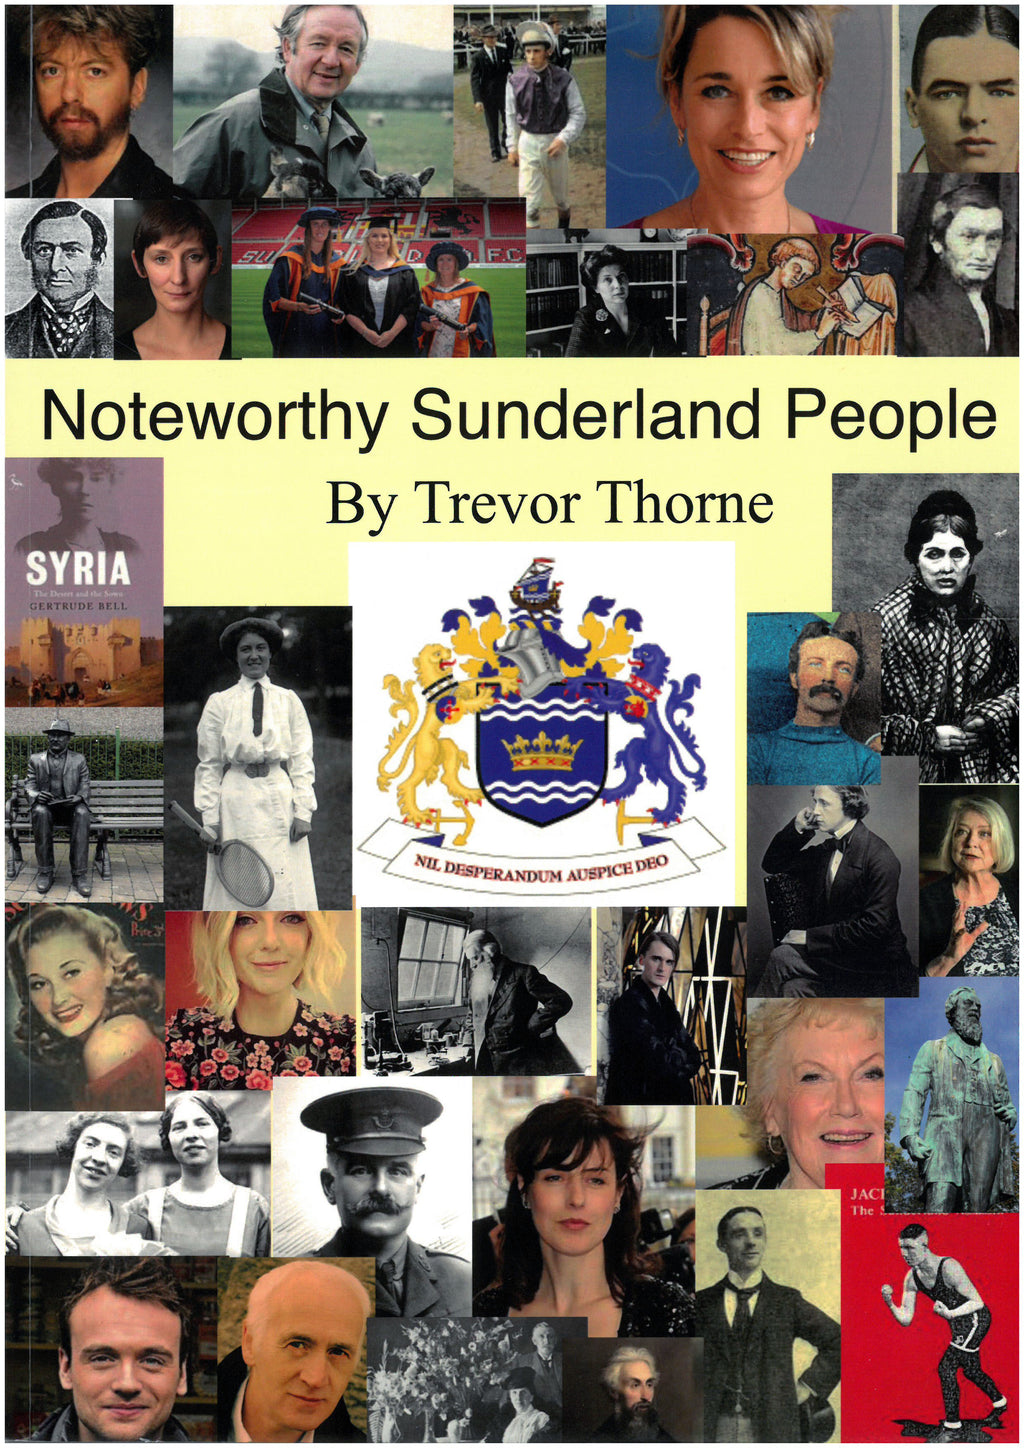 Noteworthy Sunderland People - Book by Trevor Thorne